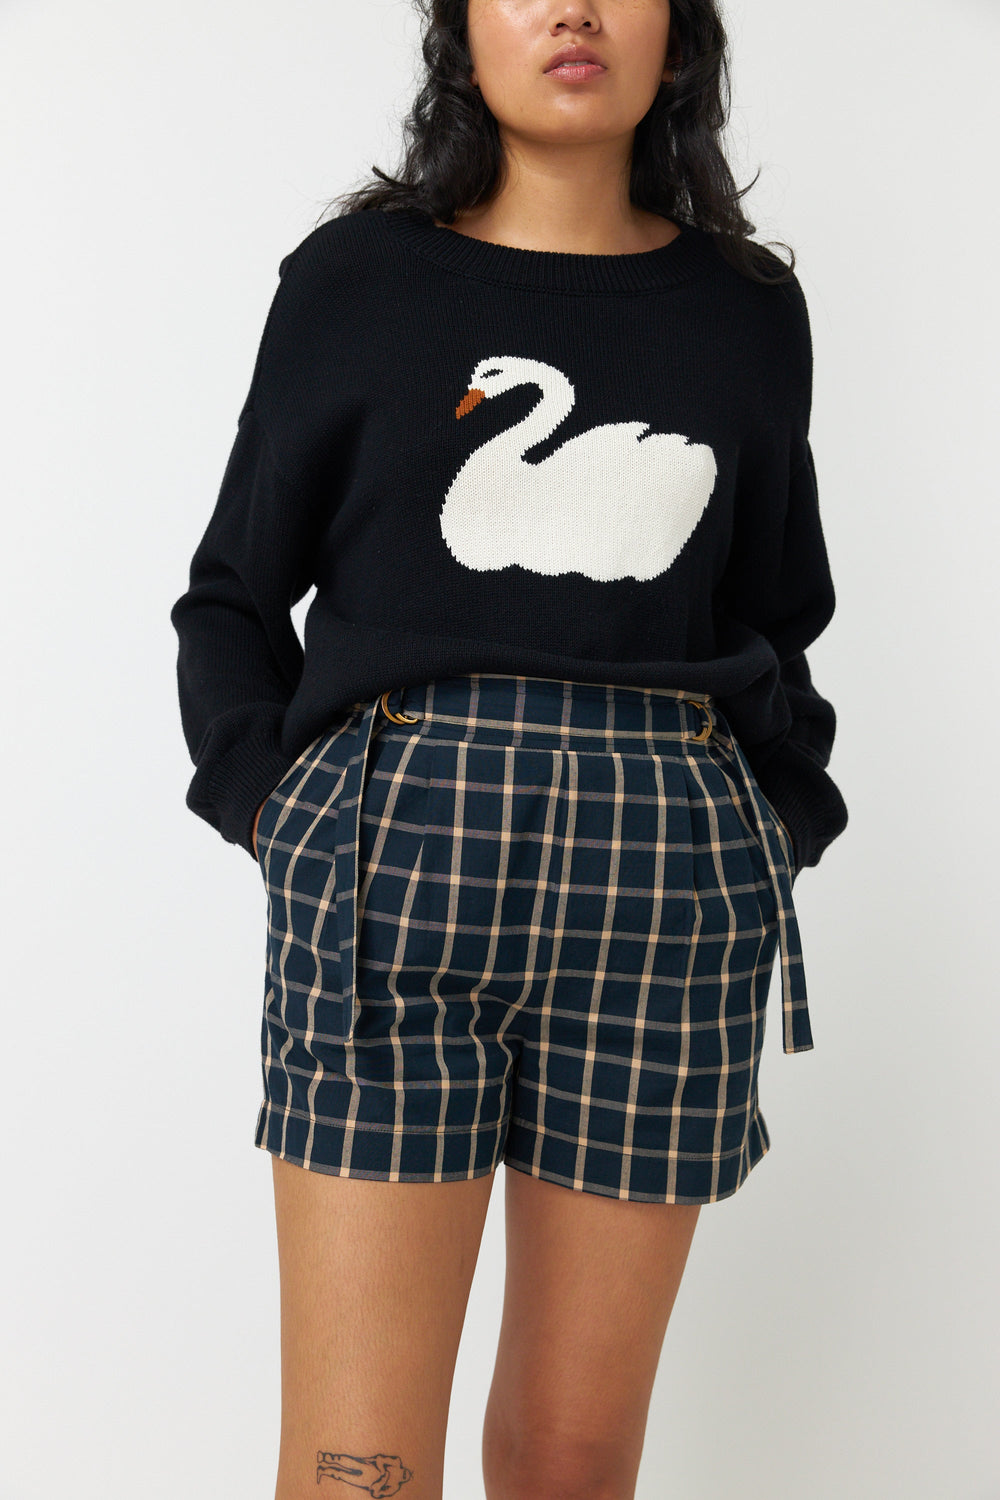 Swan jumper